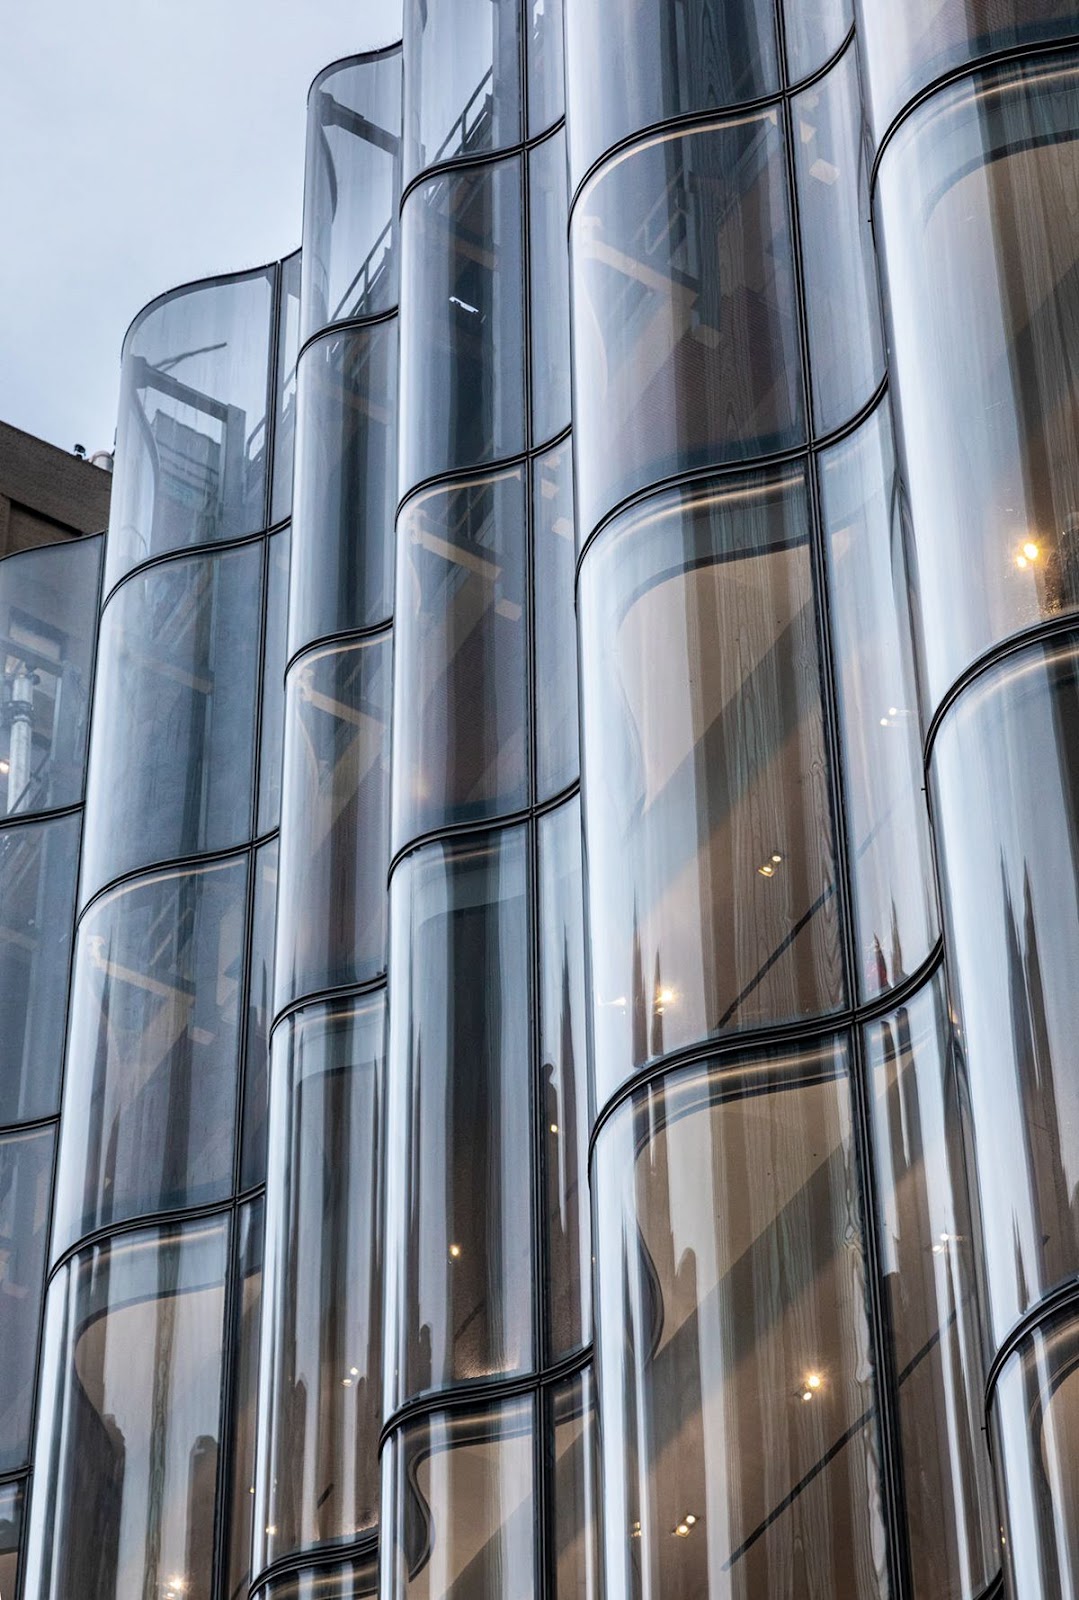 Waveform curved glass unitized facades. Source: Pinterest